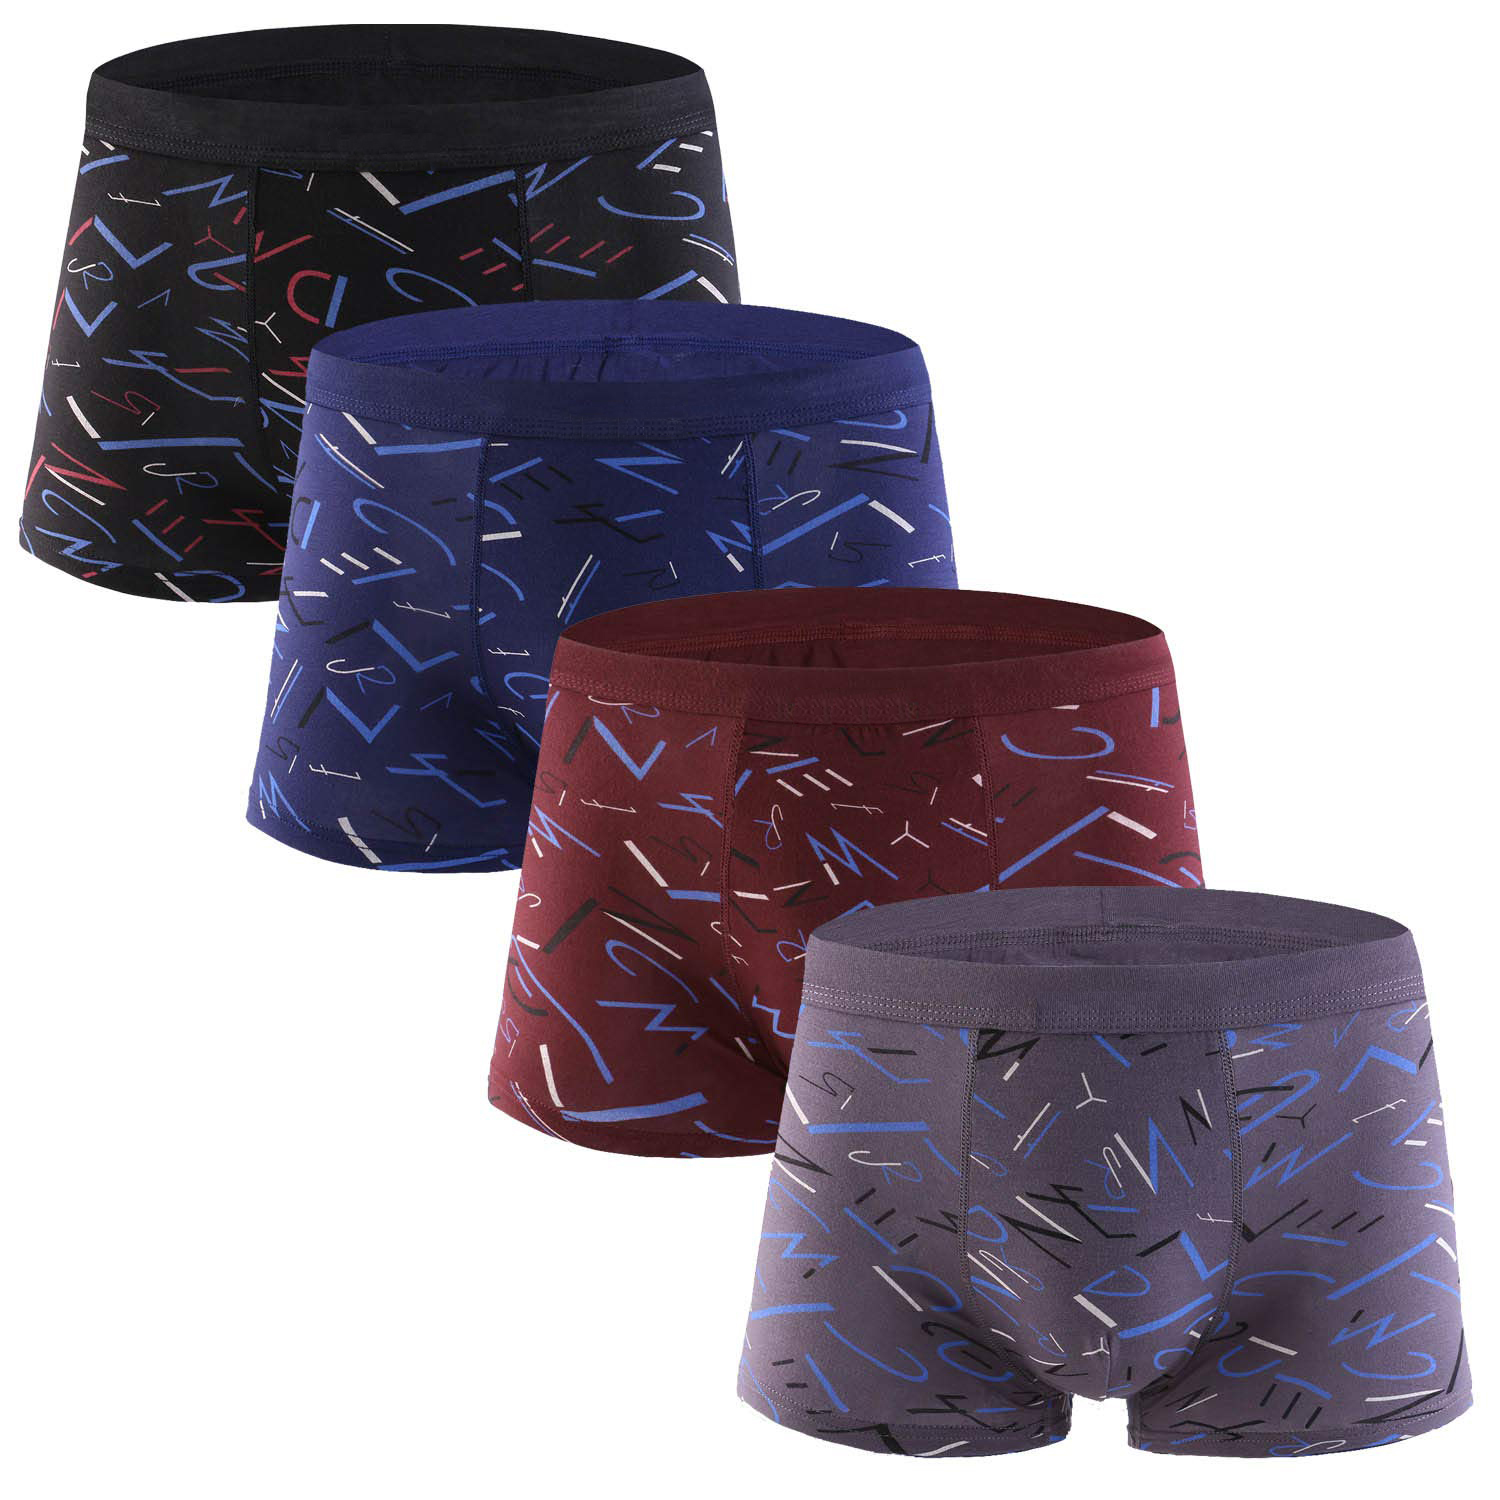 Panlalaking Underwear Soft Bamboo Boxer Briefs (3)